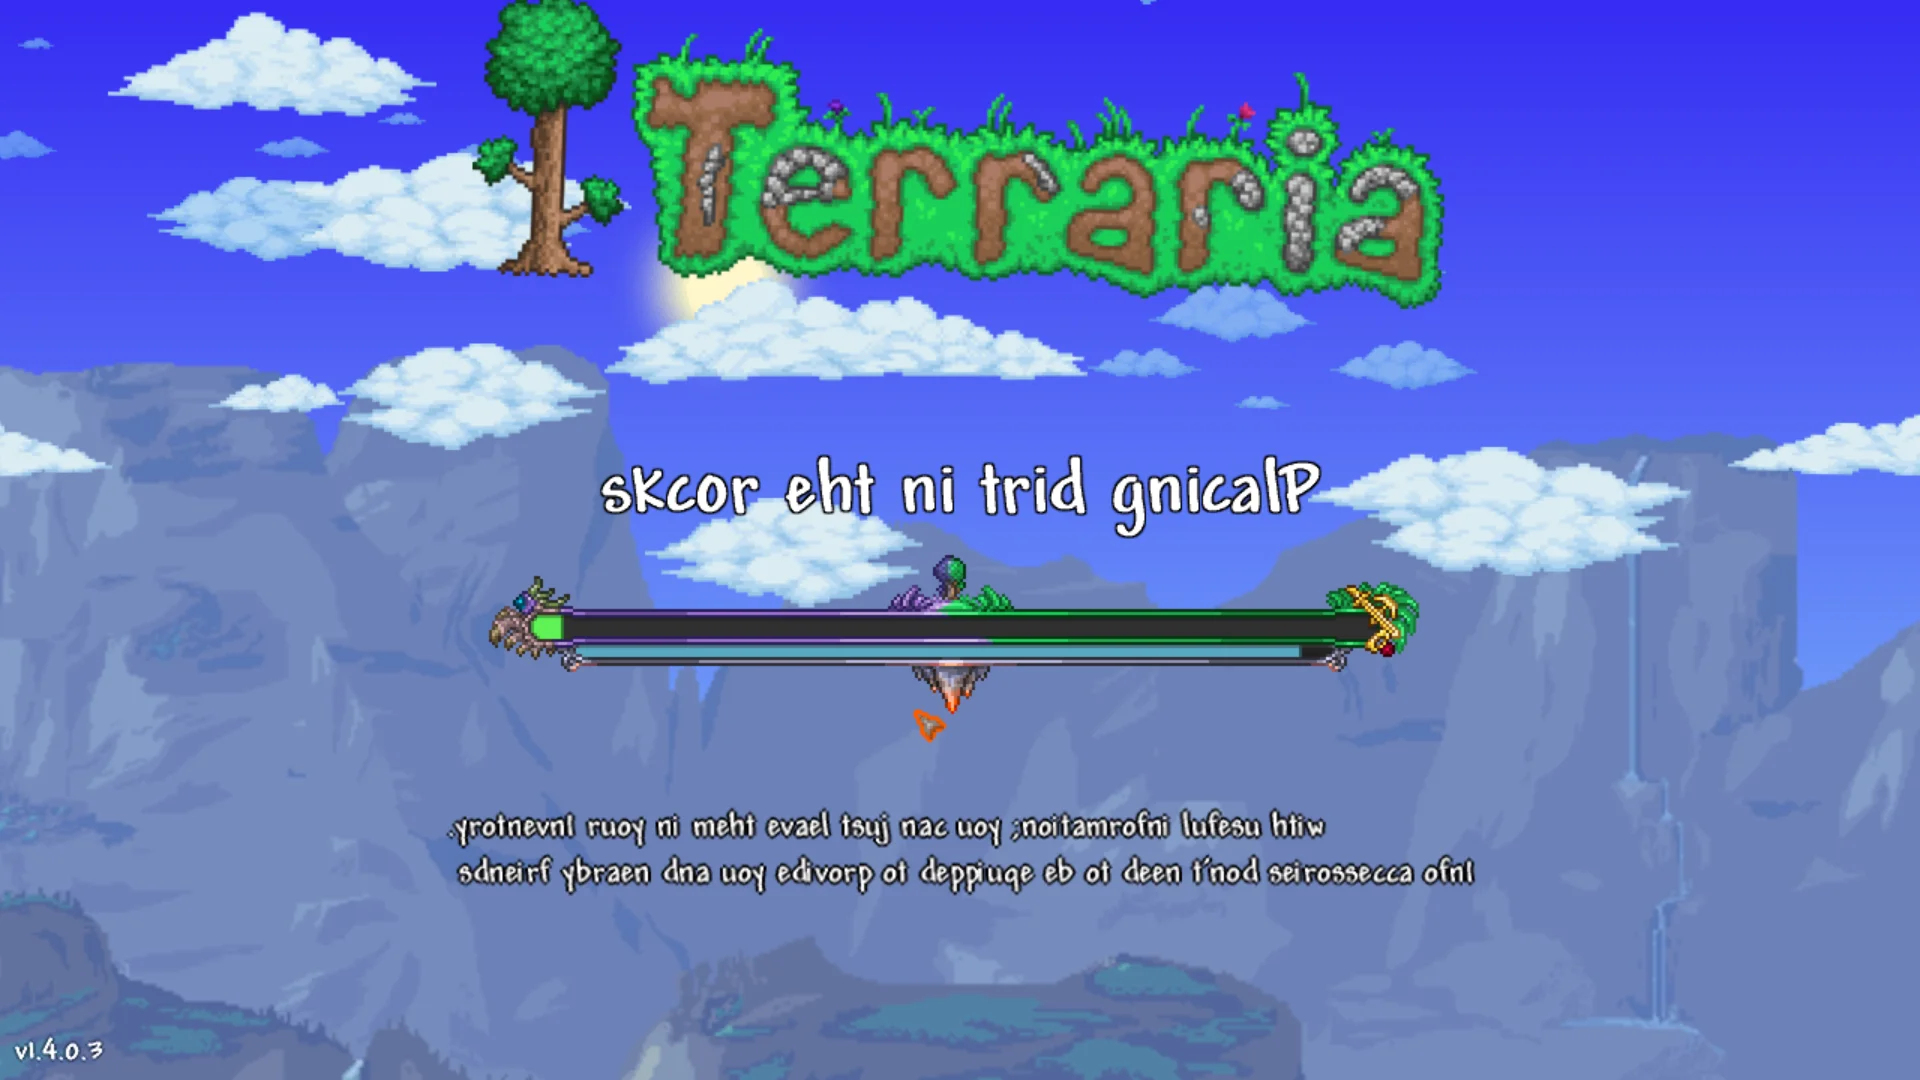 Секретный хардкорный мир For The Worthy в Terraria 1.4 Journey’s End